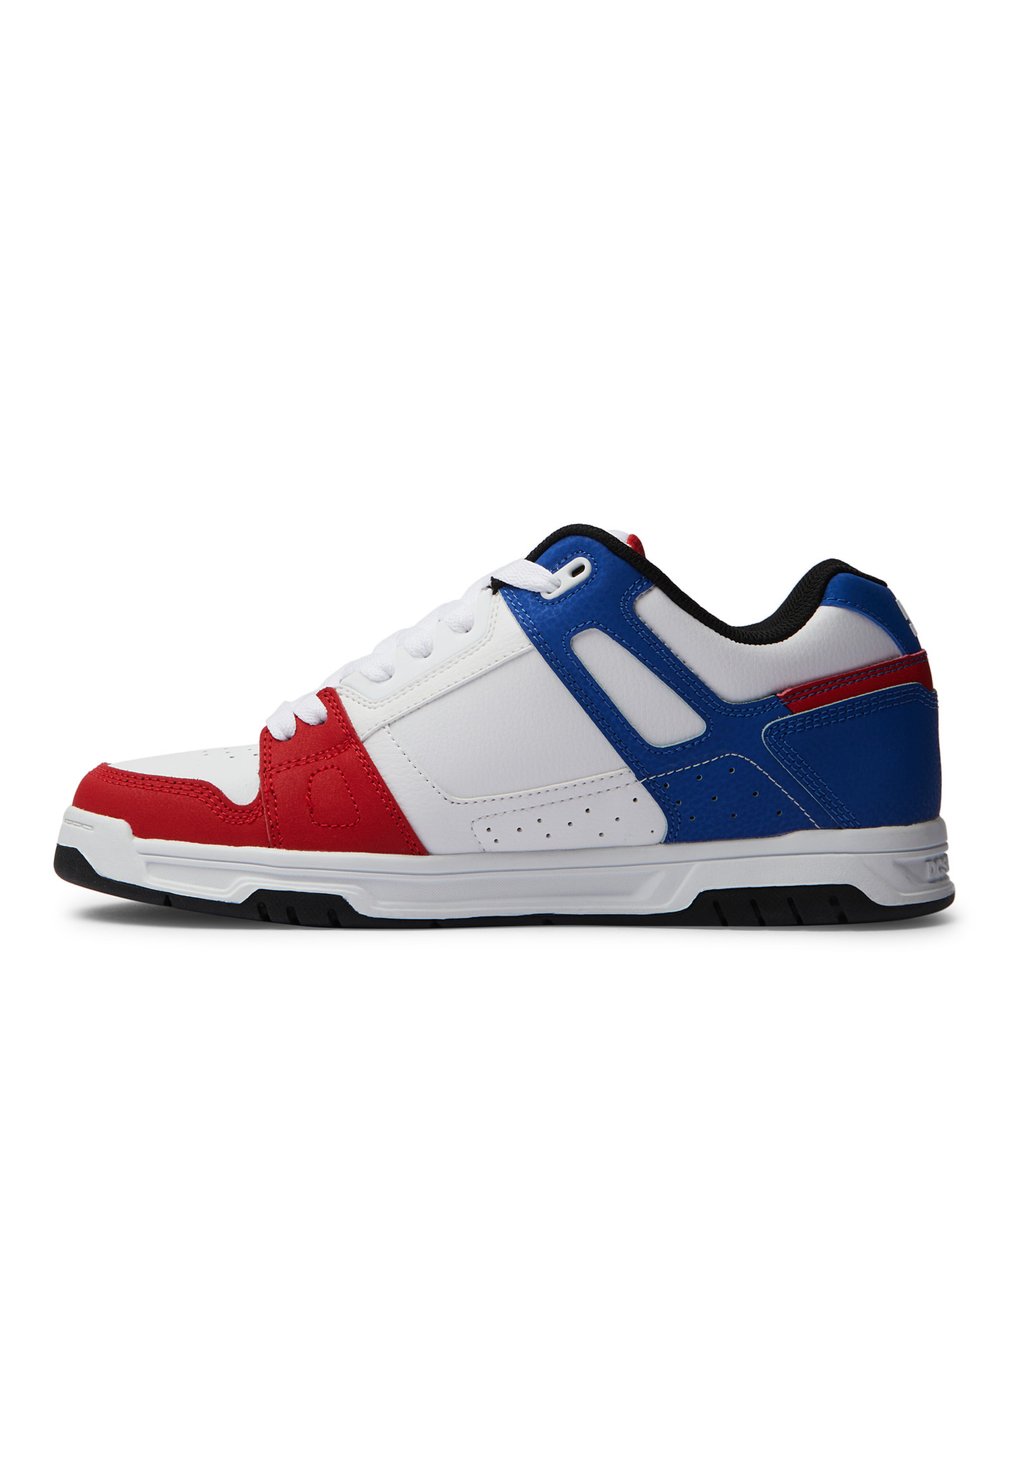 Туфли для скейтбординга STAG DC Shoes, цвет red white blue